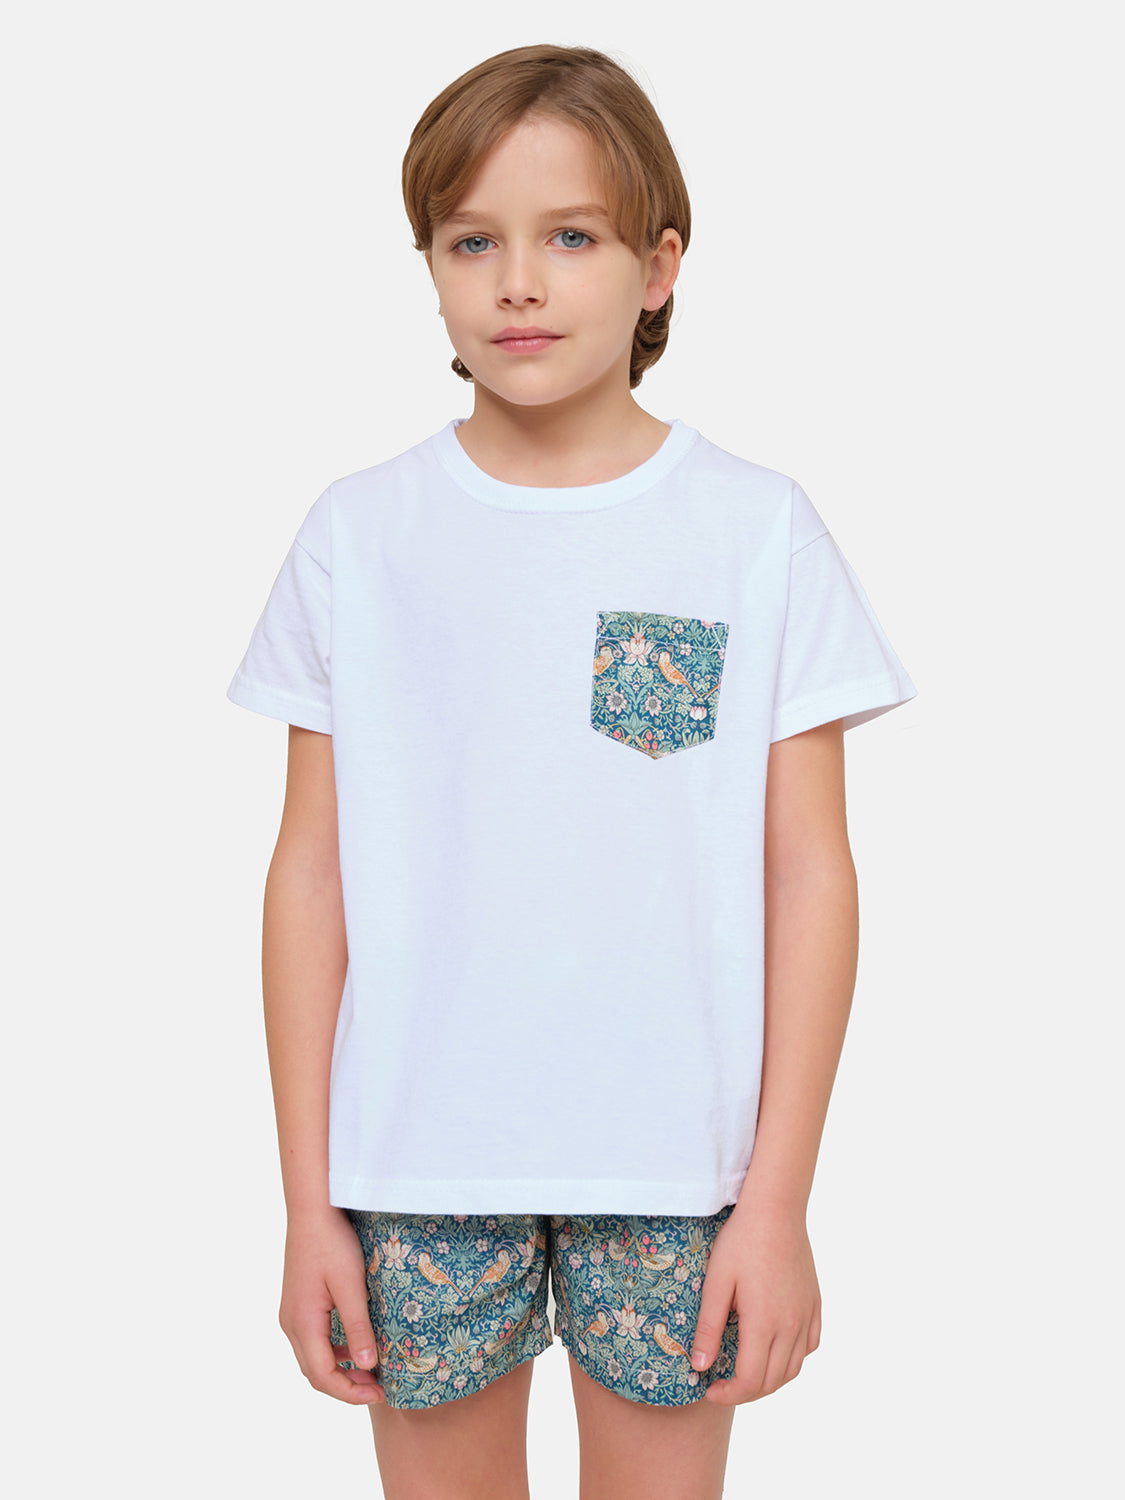 T-shirt bambino Uccellini Verdi